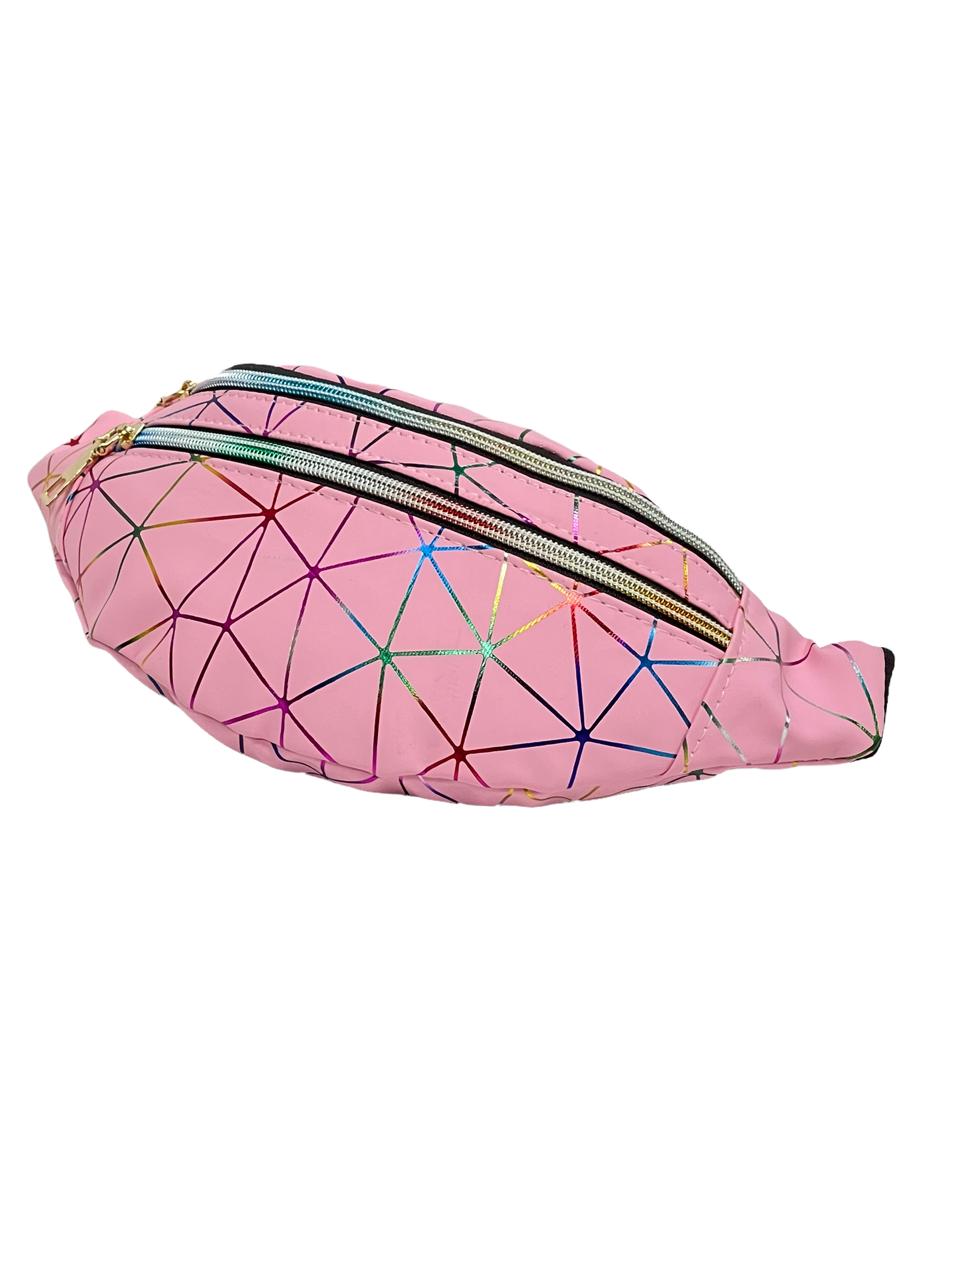 Поясная сумка унисекс BAGS-ART Collection, розовый